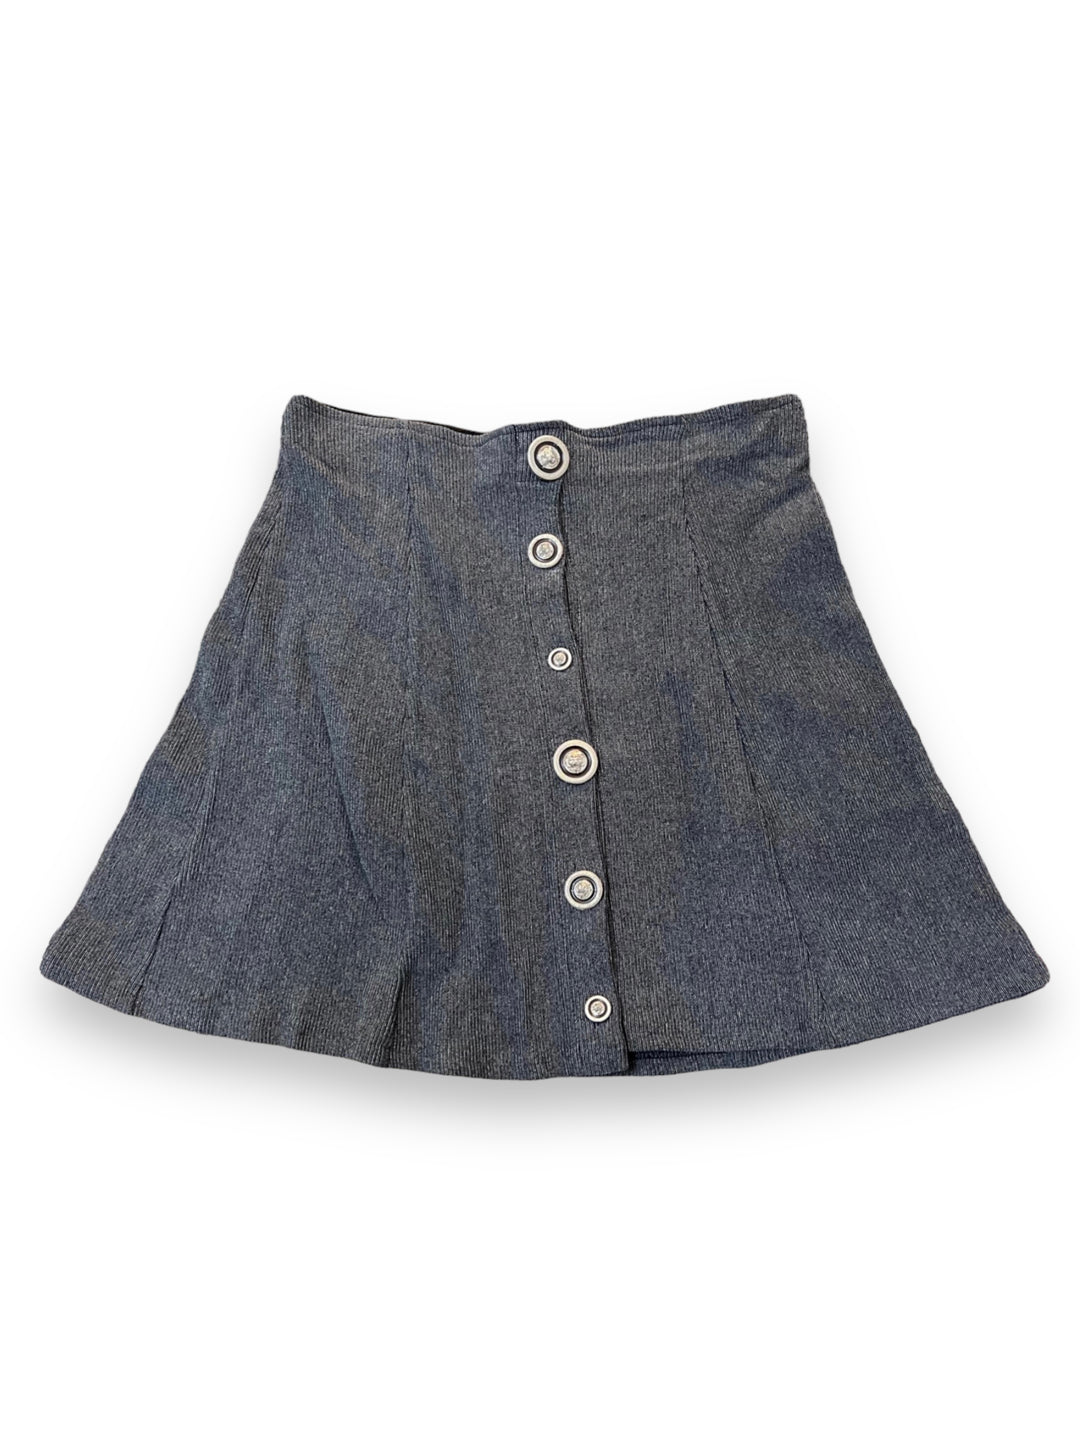 Vintage Cotton Buttoned Skirt Large